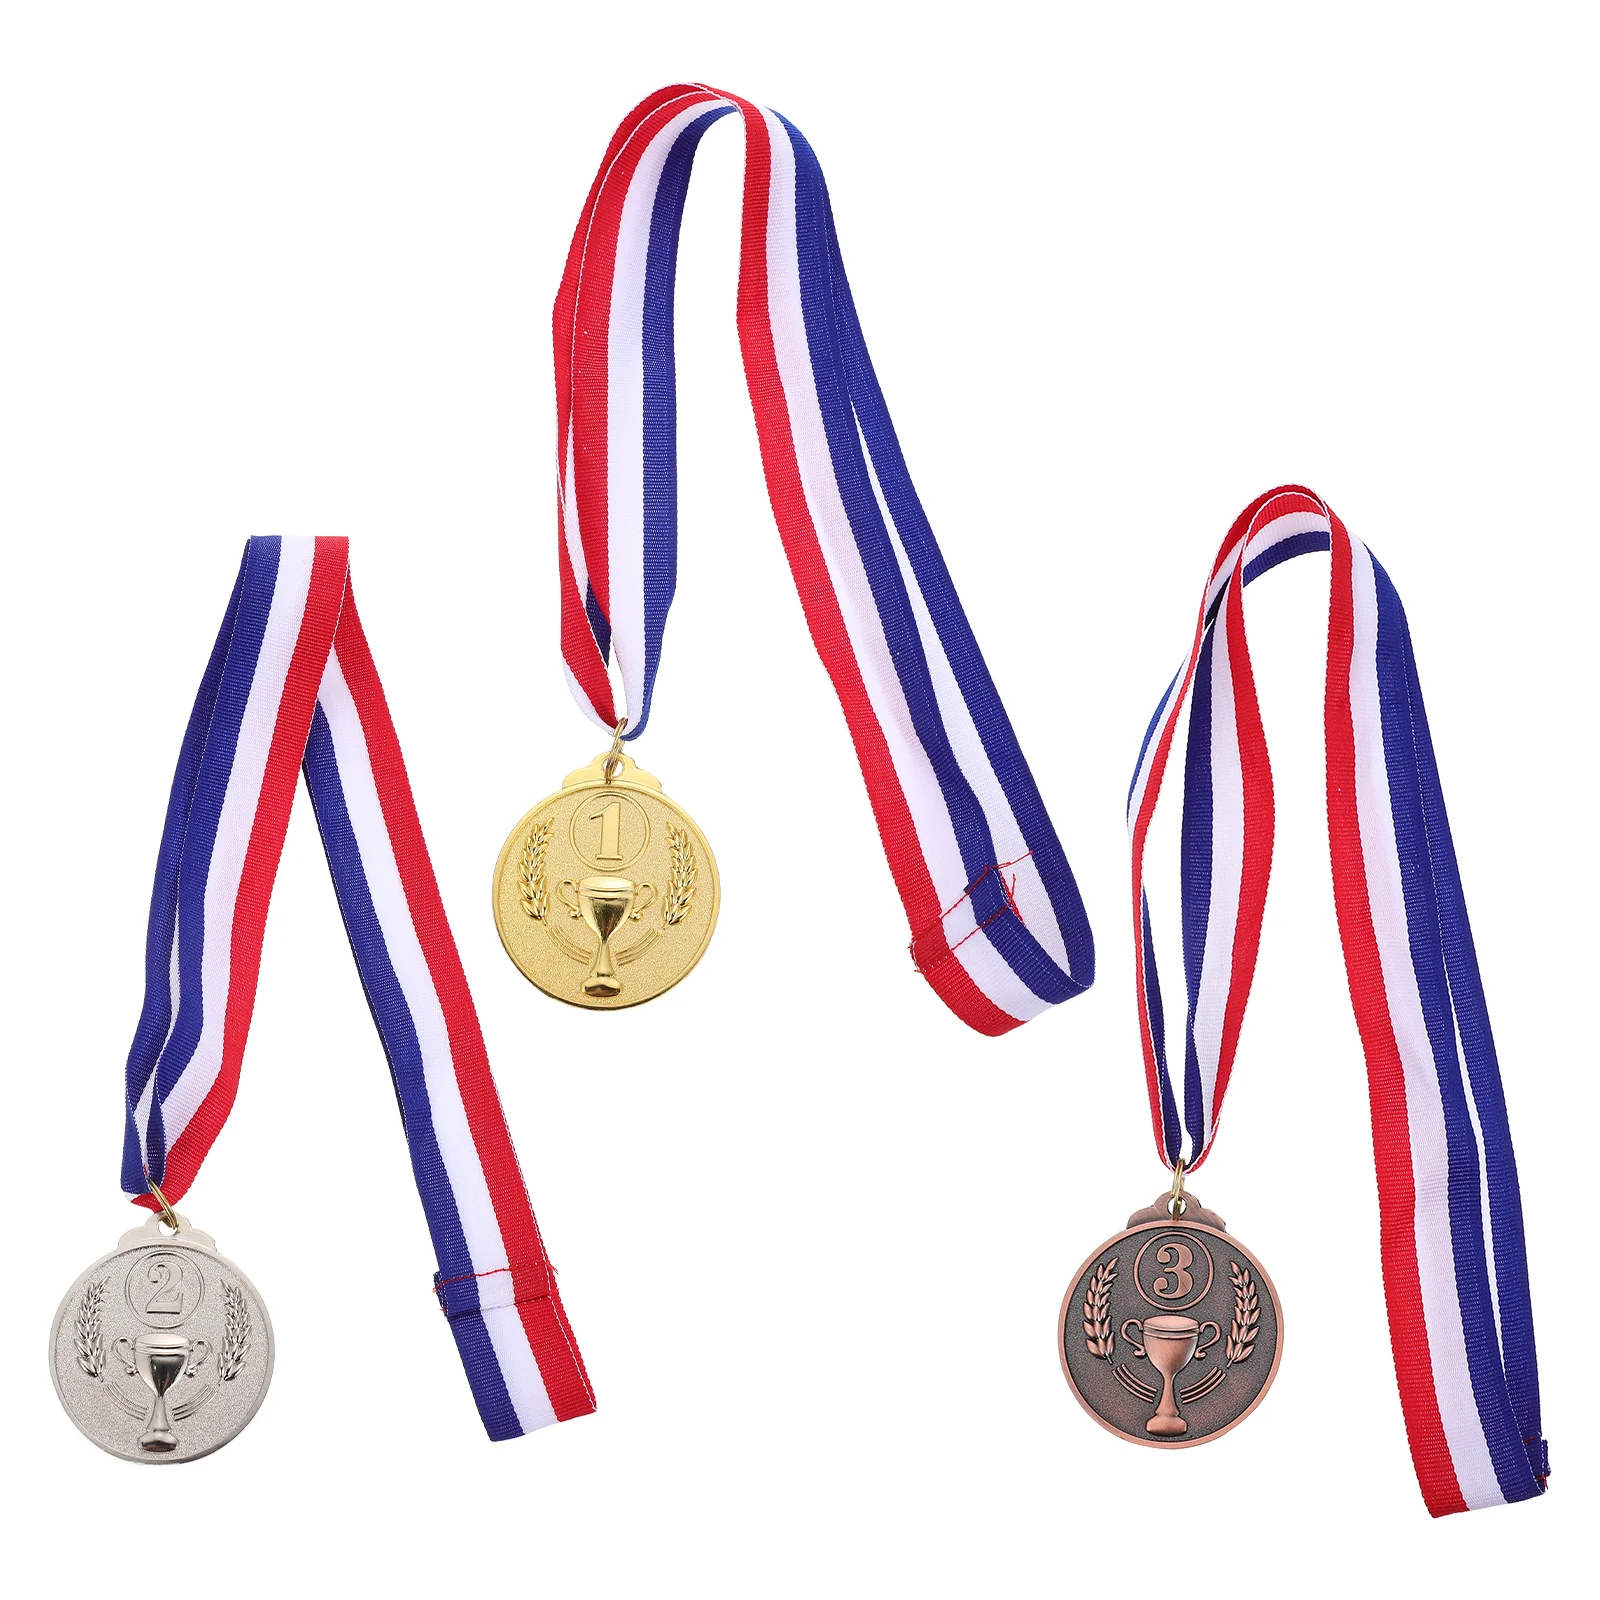 

3pcs Competition Awards Medals Marathon Sports Medals Hanging Medal Awards